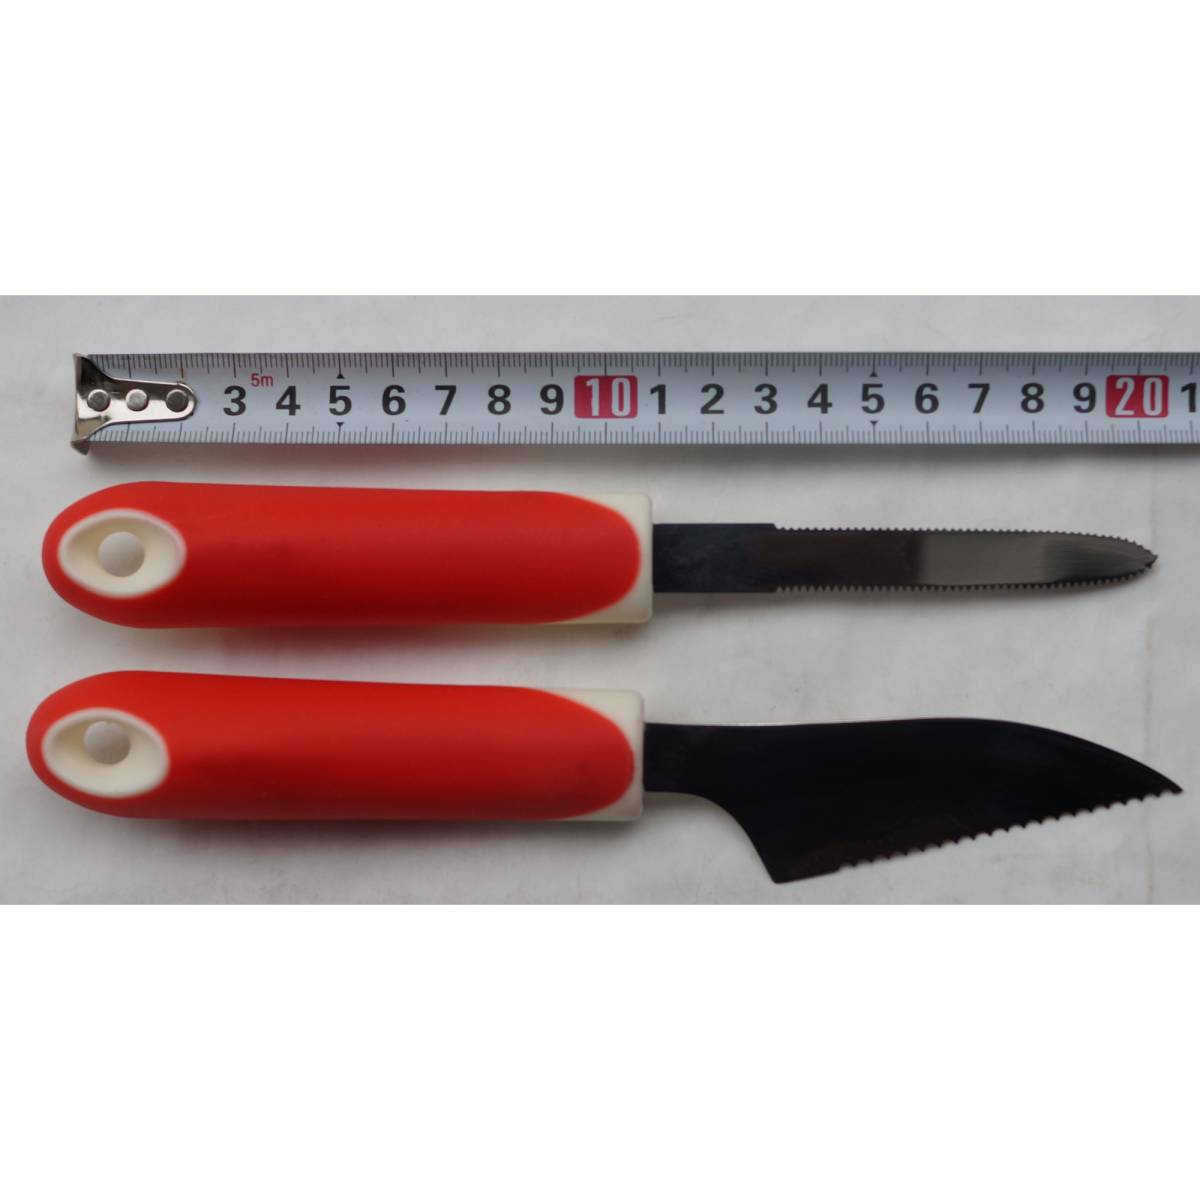  small osteotomy knife & grapefruit knife 